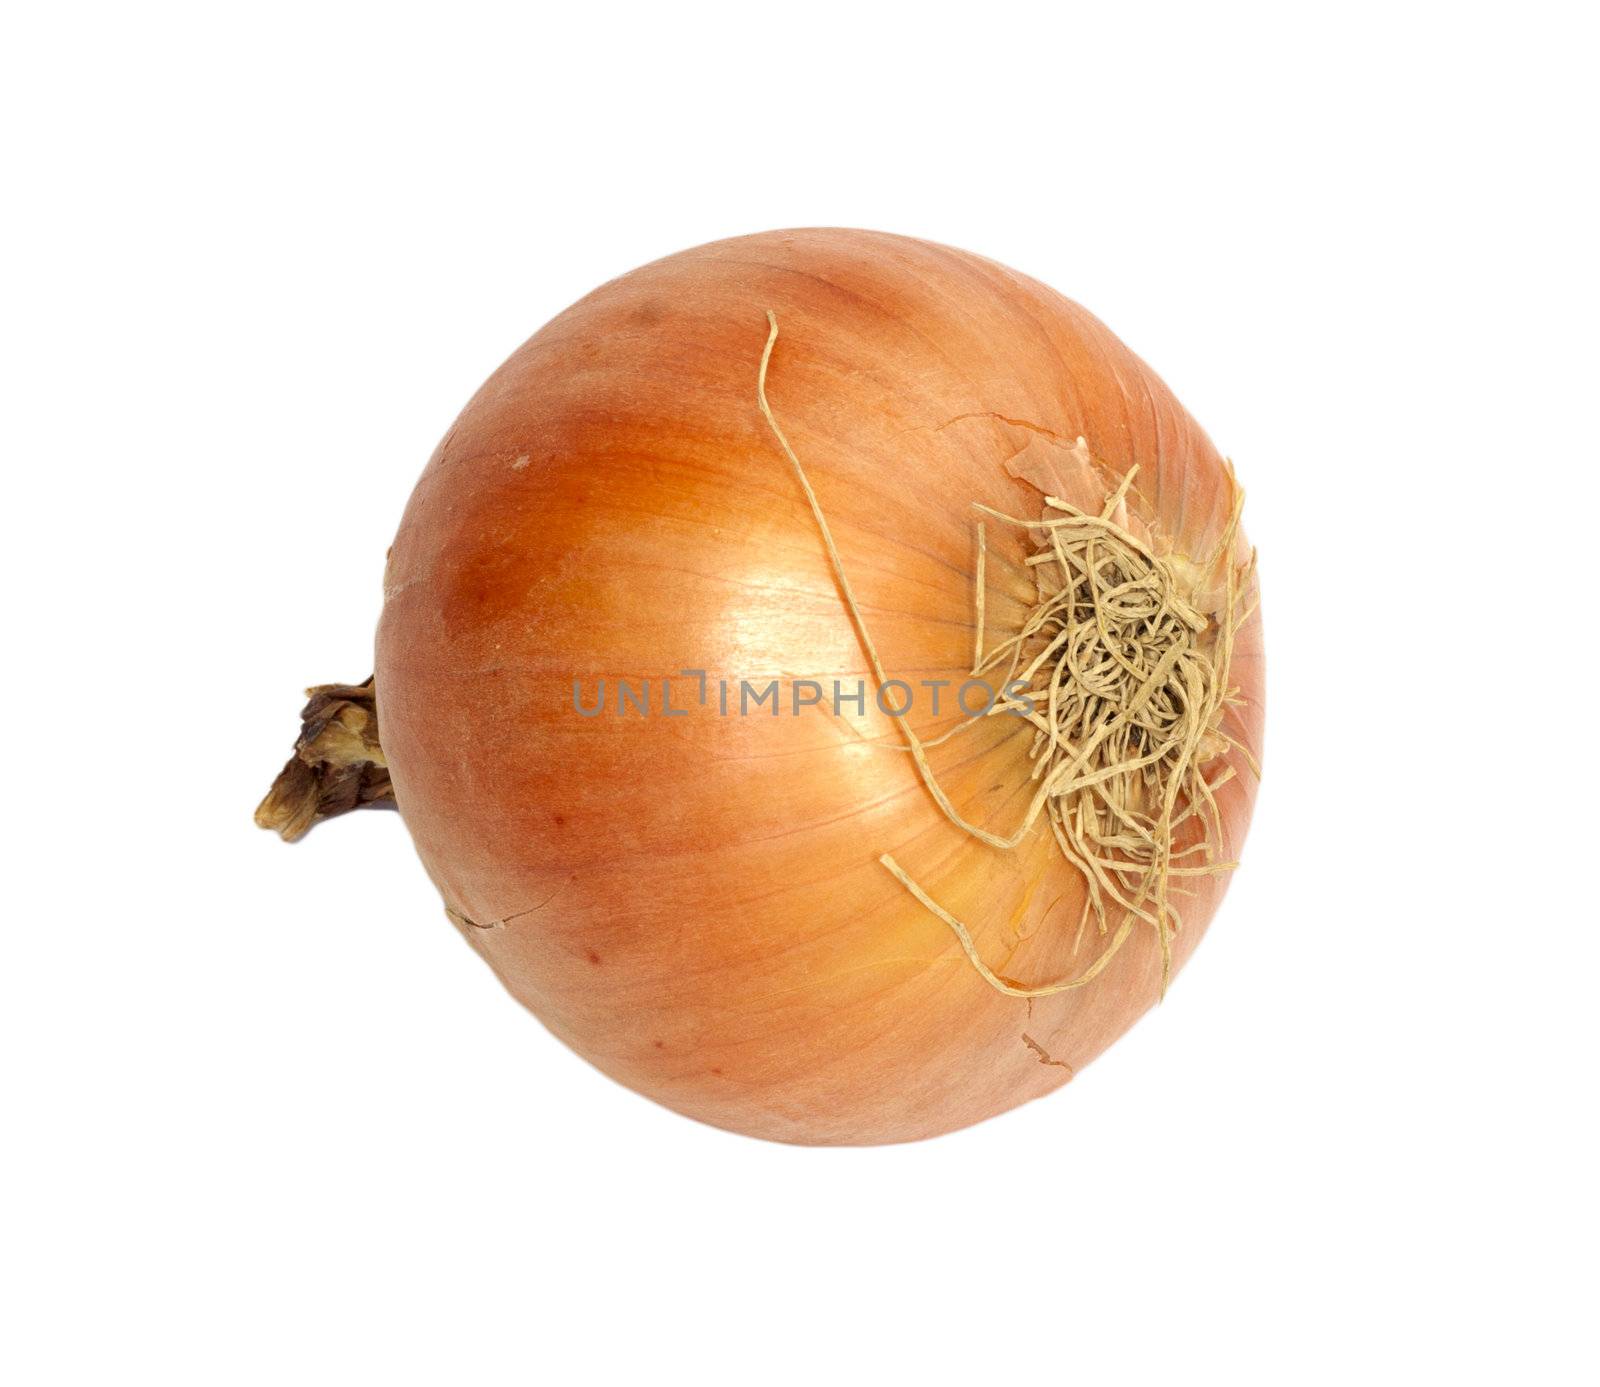 Ripe onion on a white background  by schankz